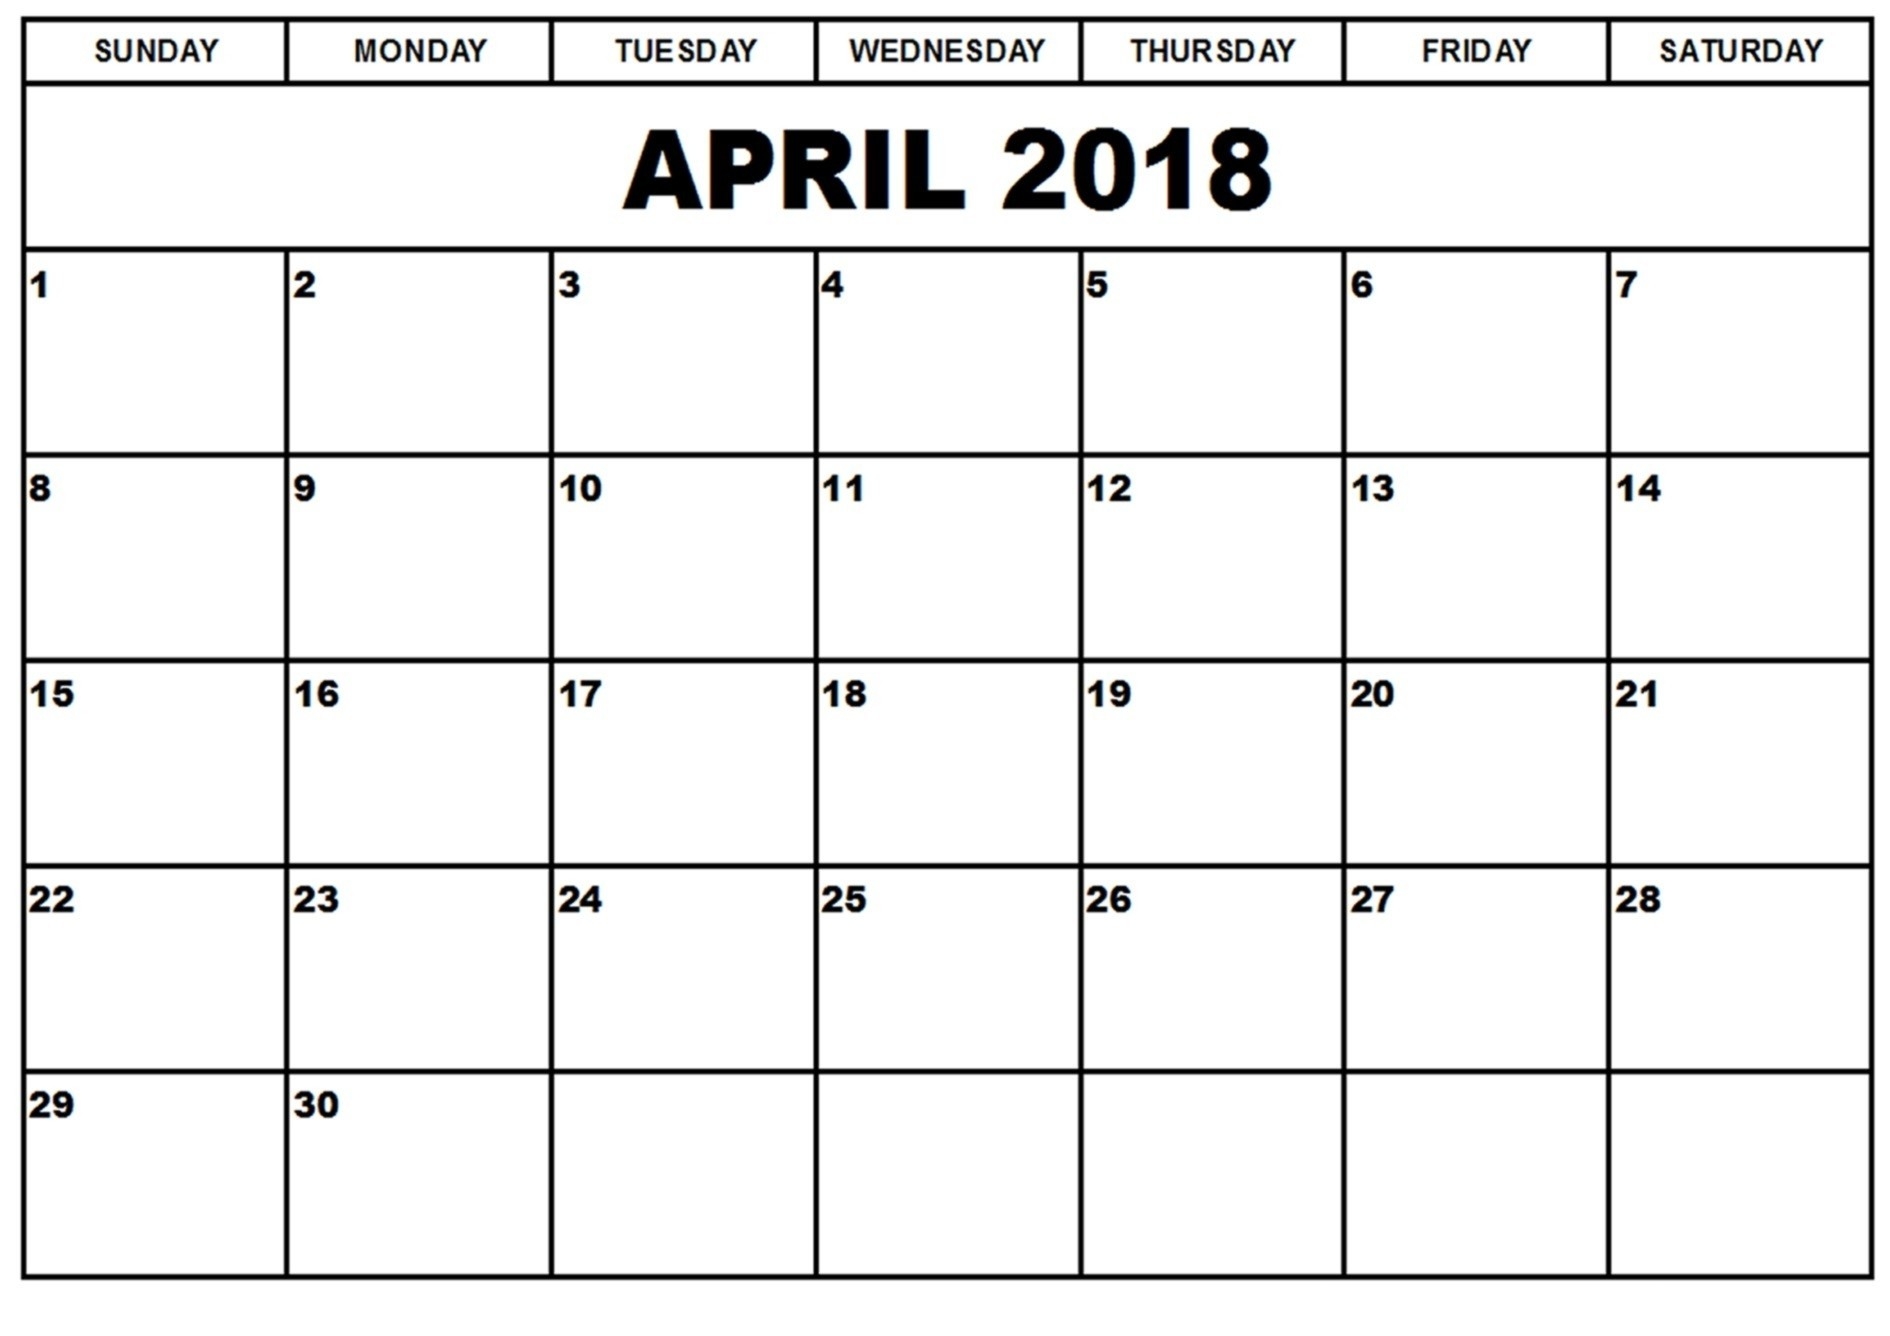 Free Calendar Templates For The Blind - Calendar Inspiration  Free Calendar For The Blind